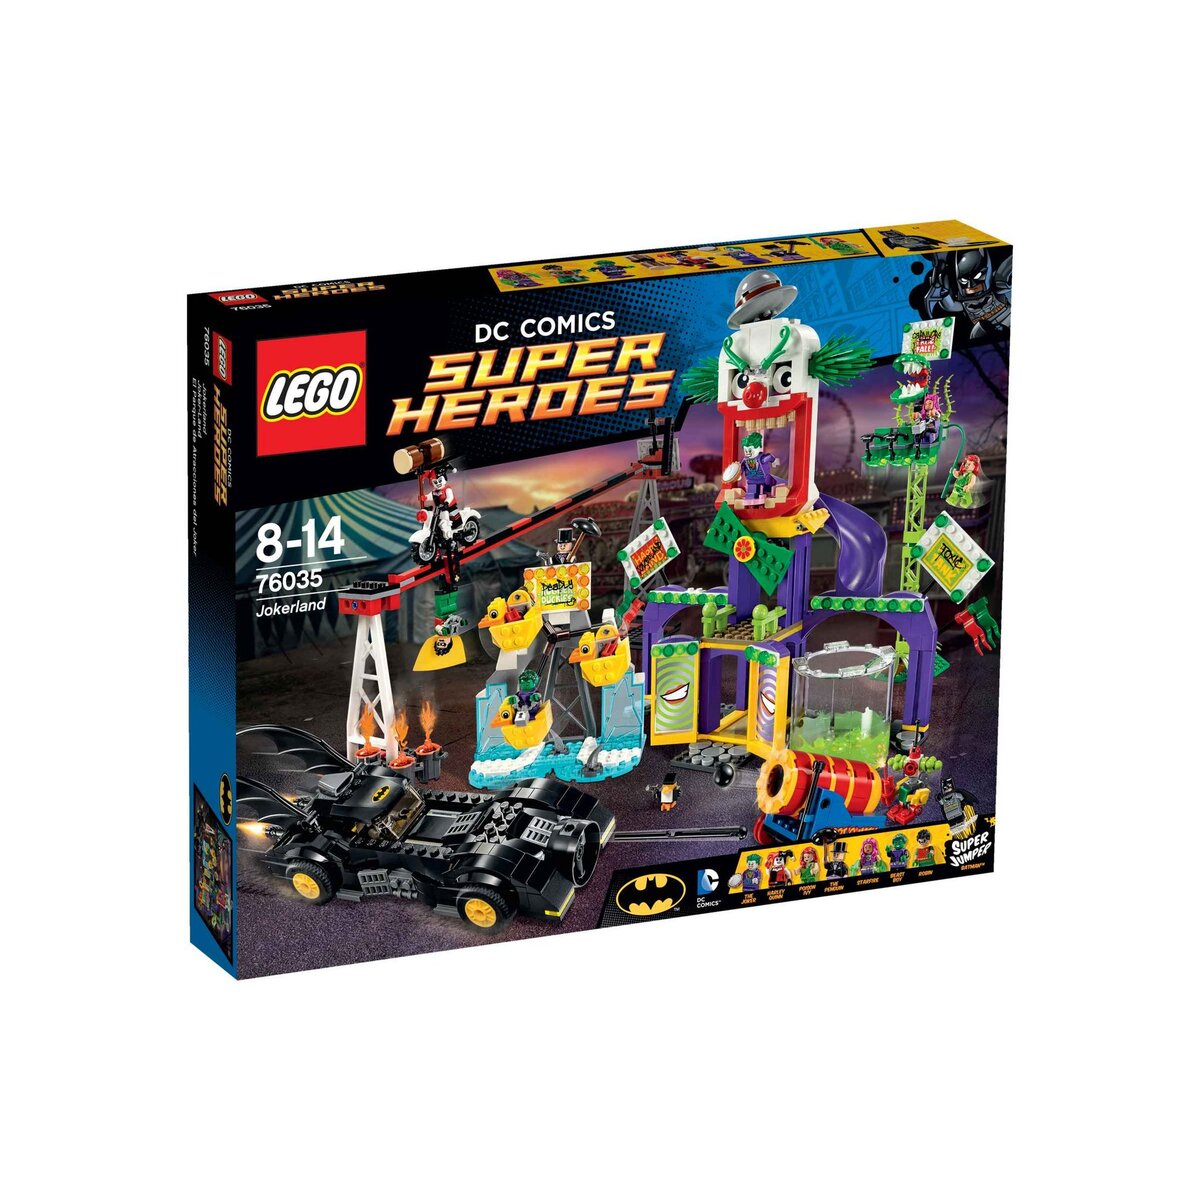 LEGO DC Comics Super Heroes 76035 - Jokerland